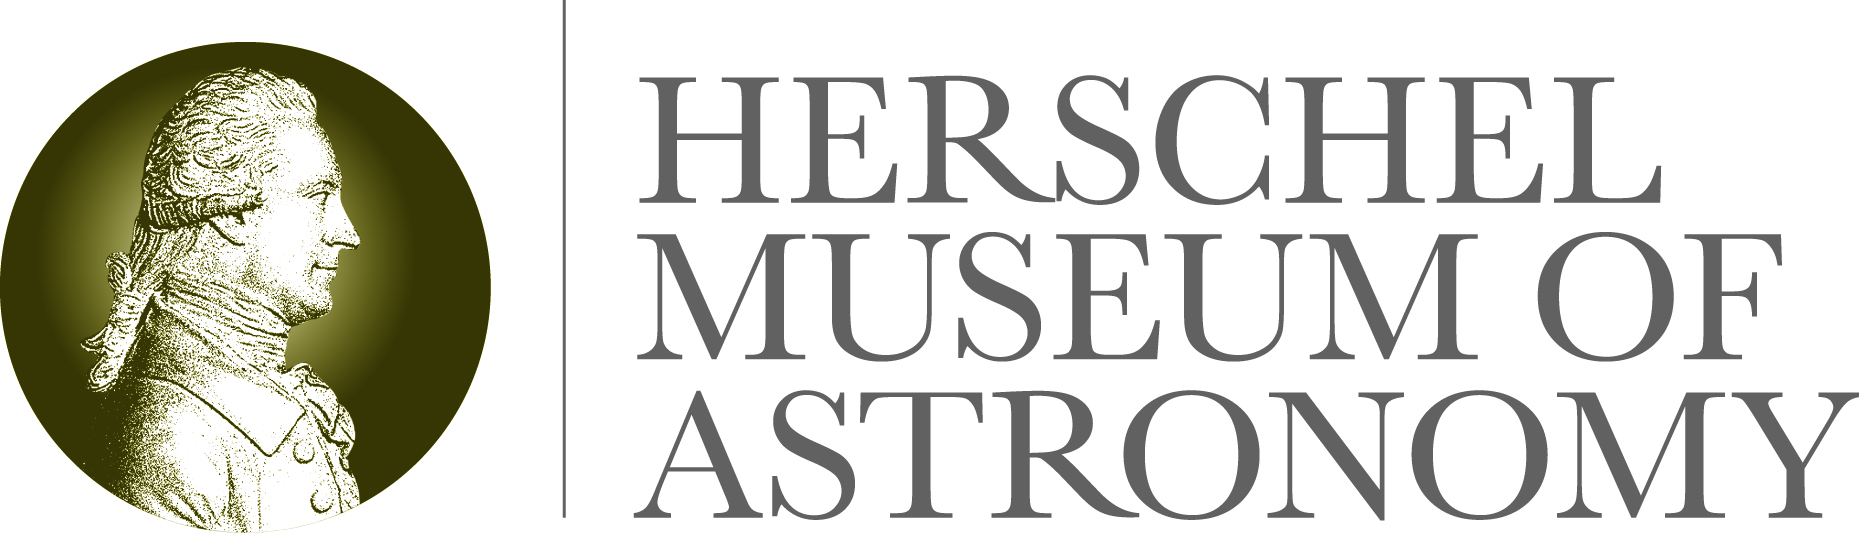 Herschel_logo_cmyk.jpg